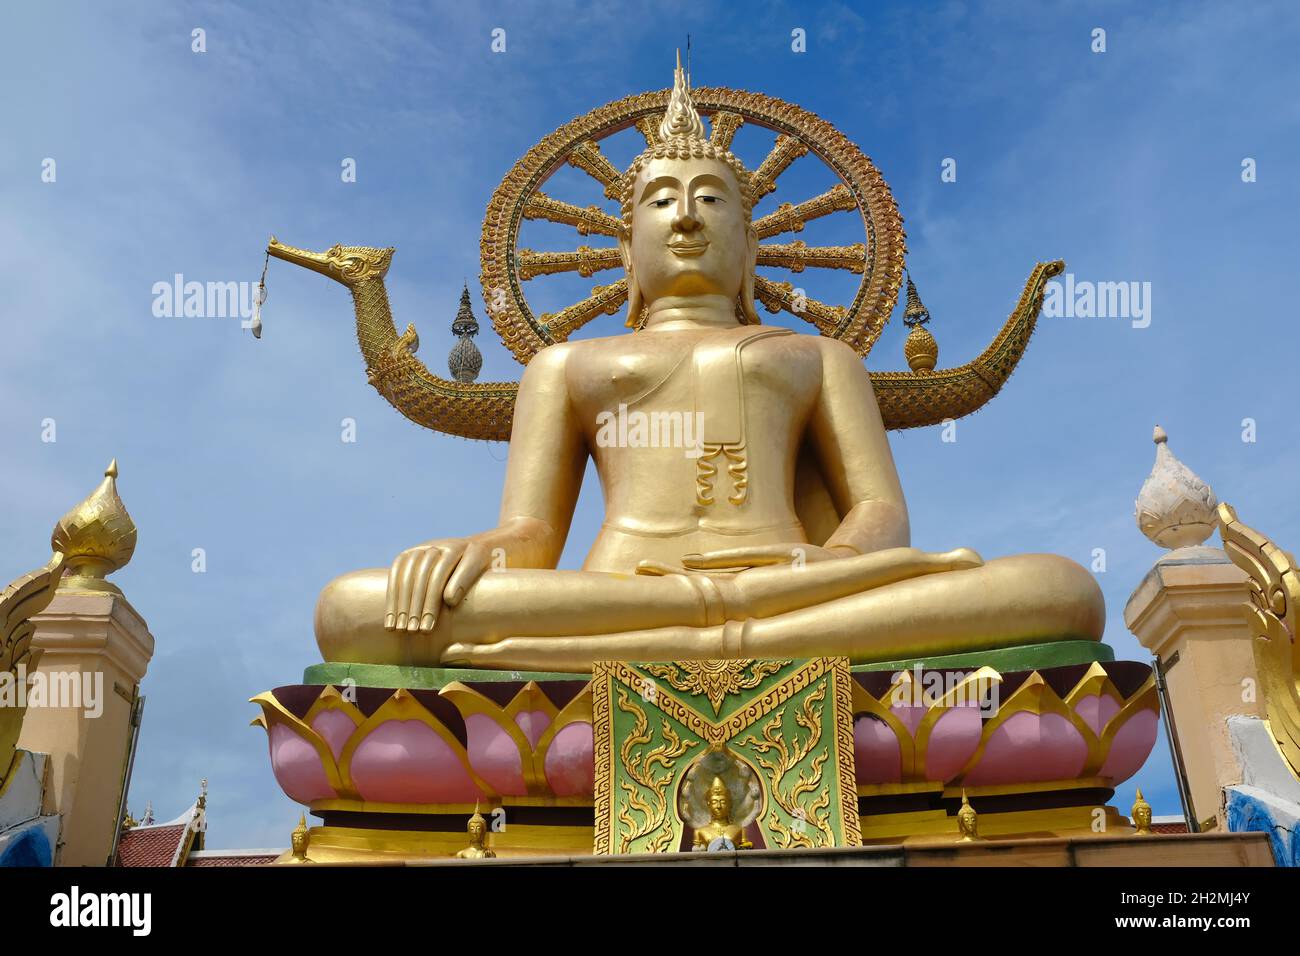 The big Buddha of Ko Samui, Thailand Stock Photo